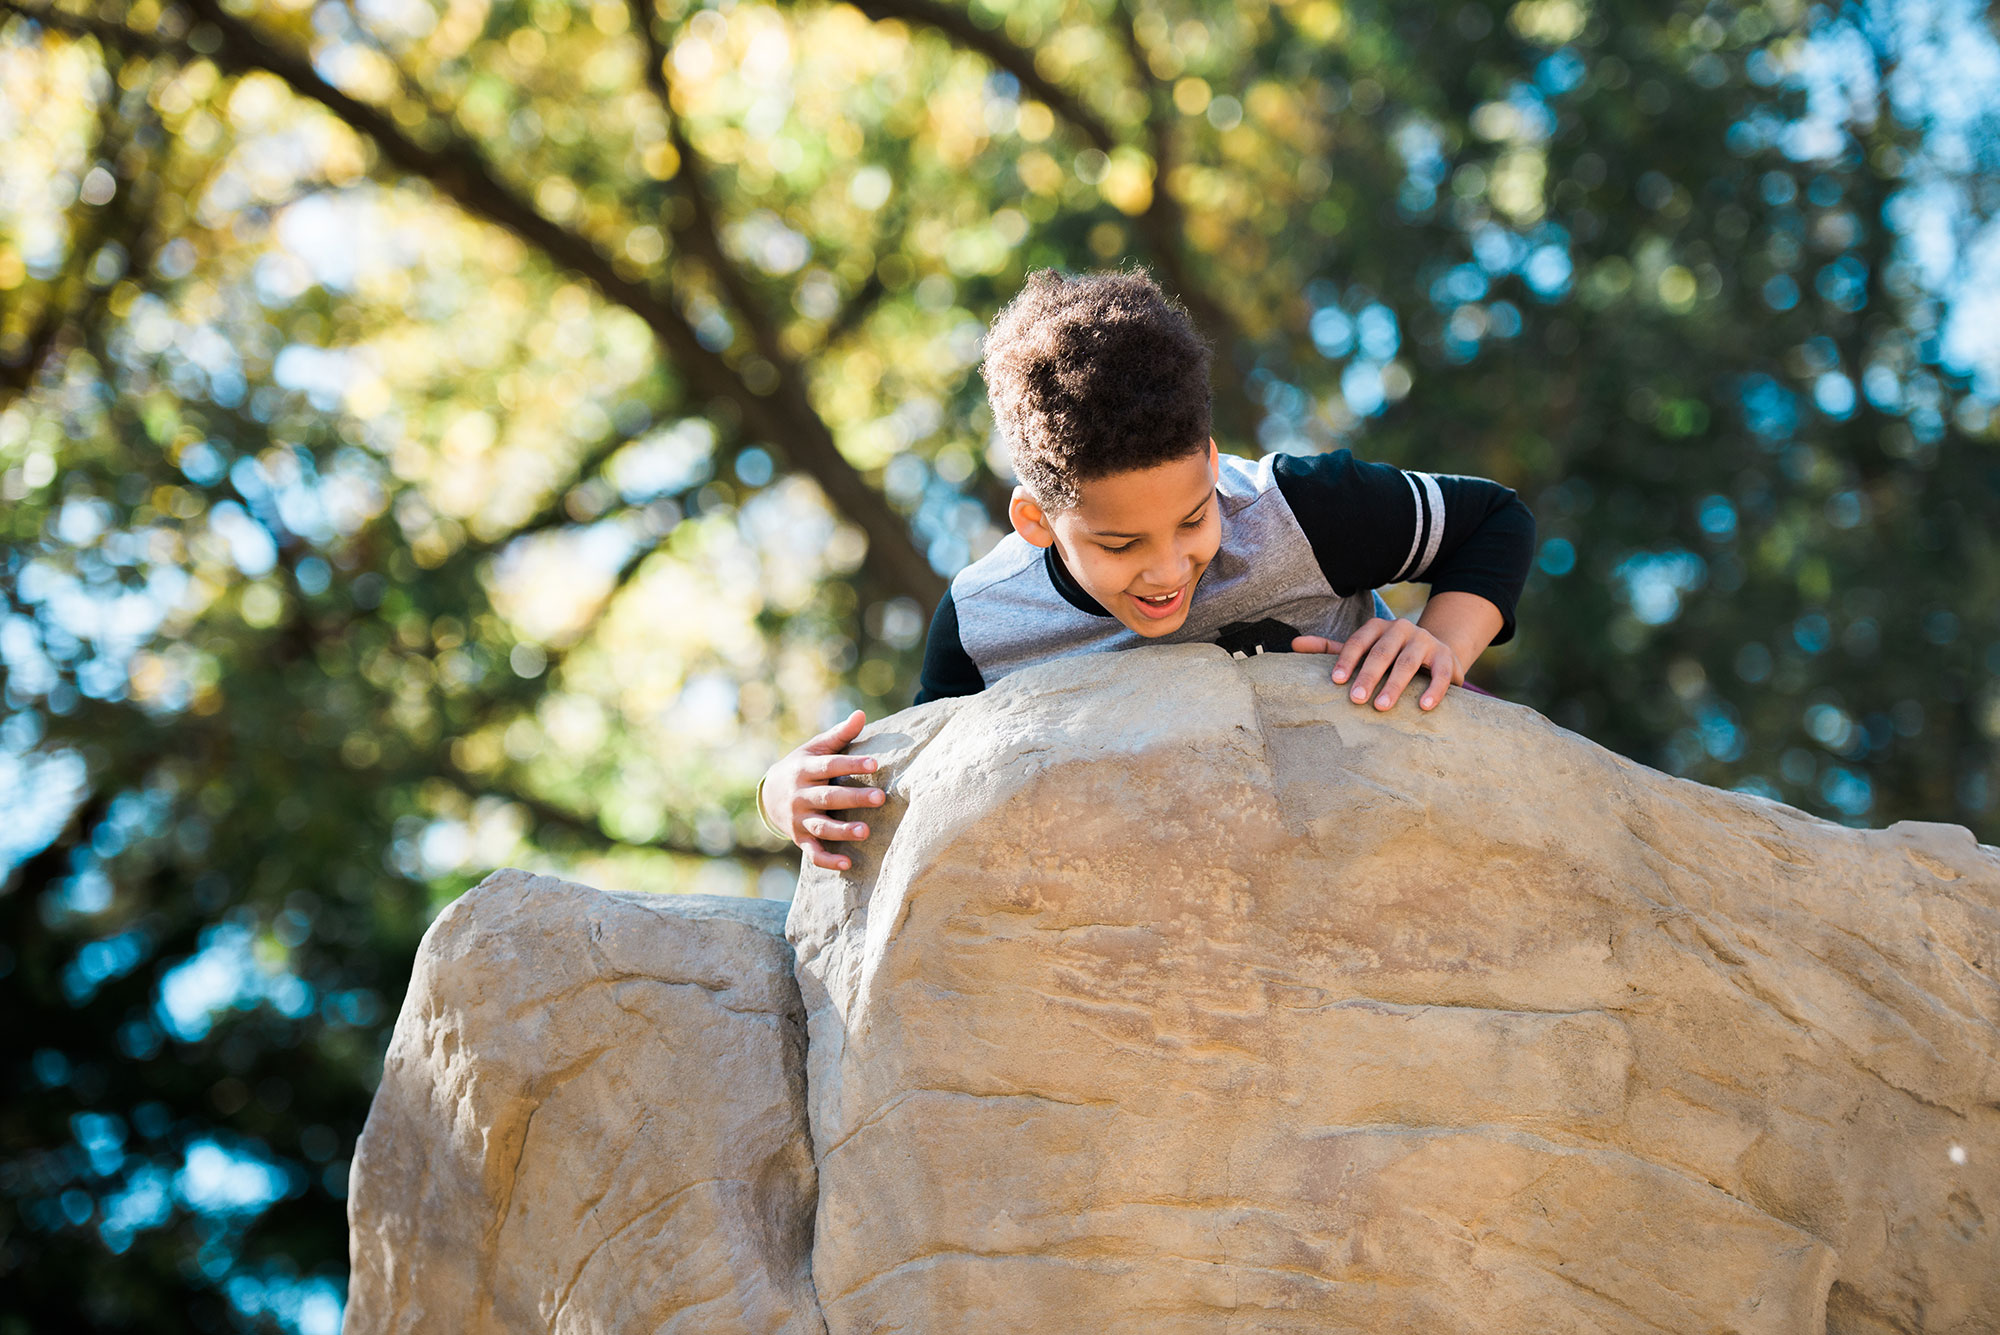 A boy climbing on a rock in a park.